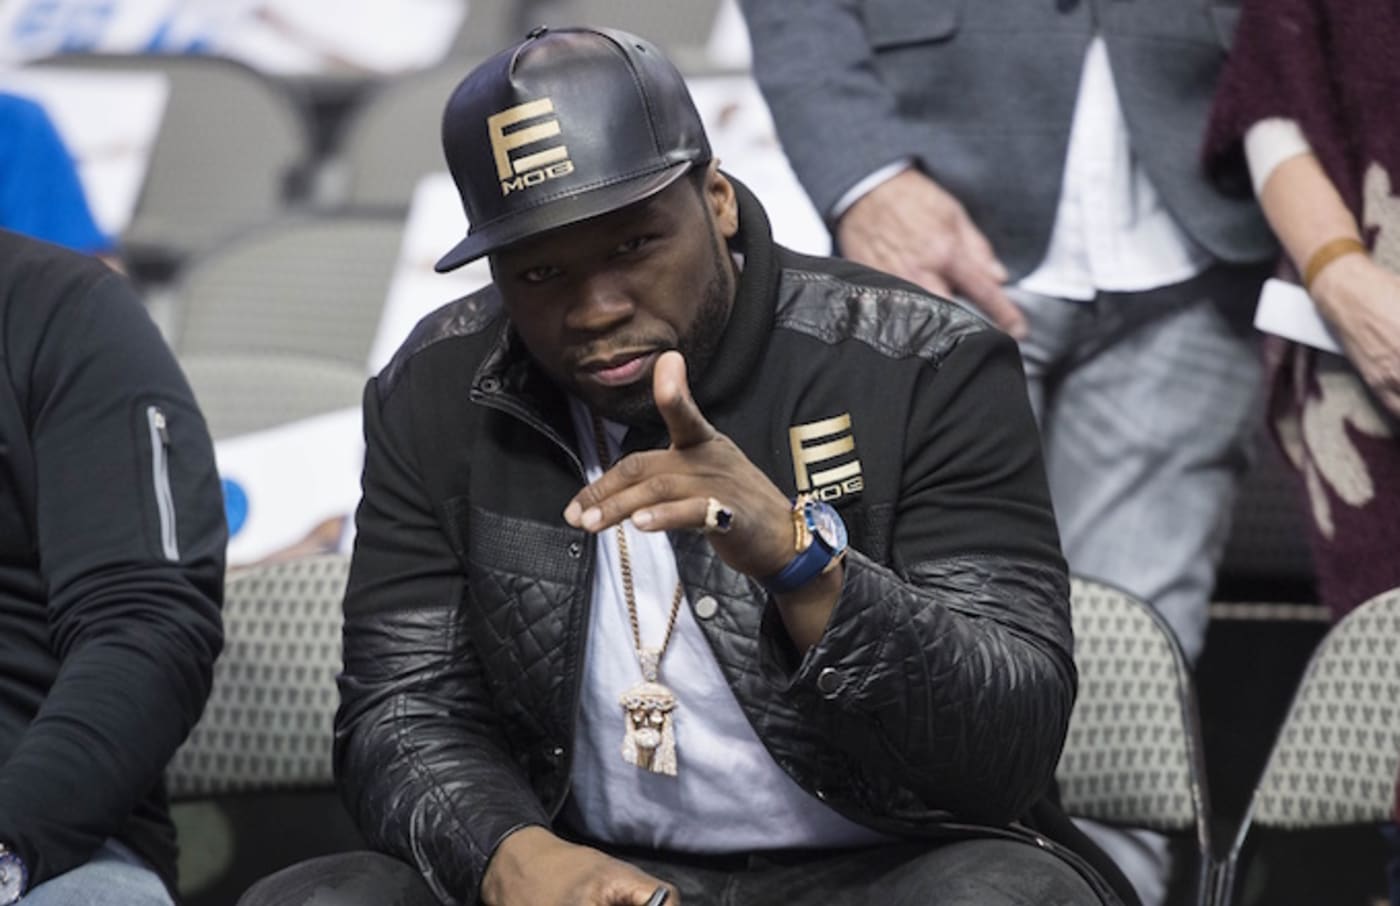 50 Cent sitting courtside.